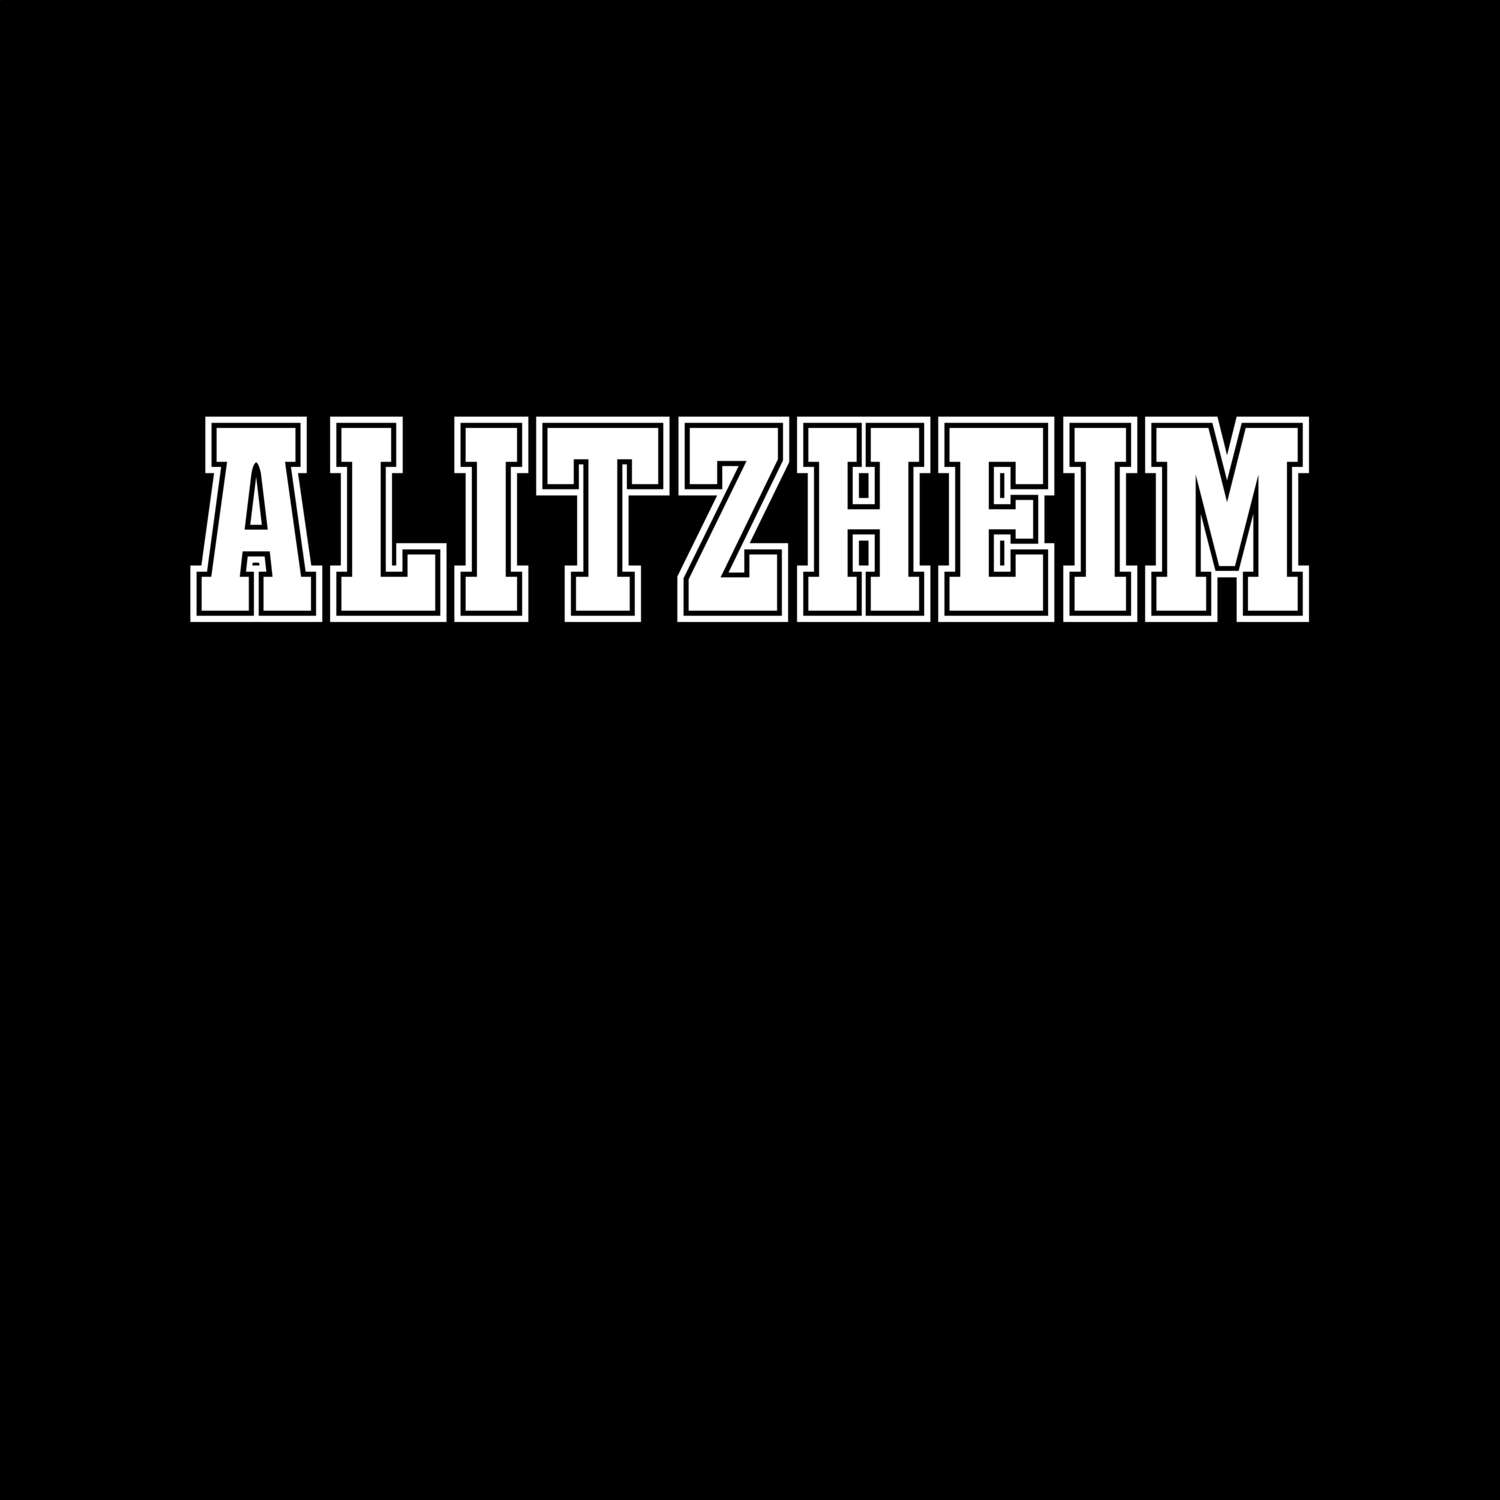 Alitzheim T-Shirt »Classic«